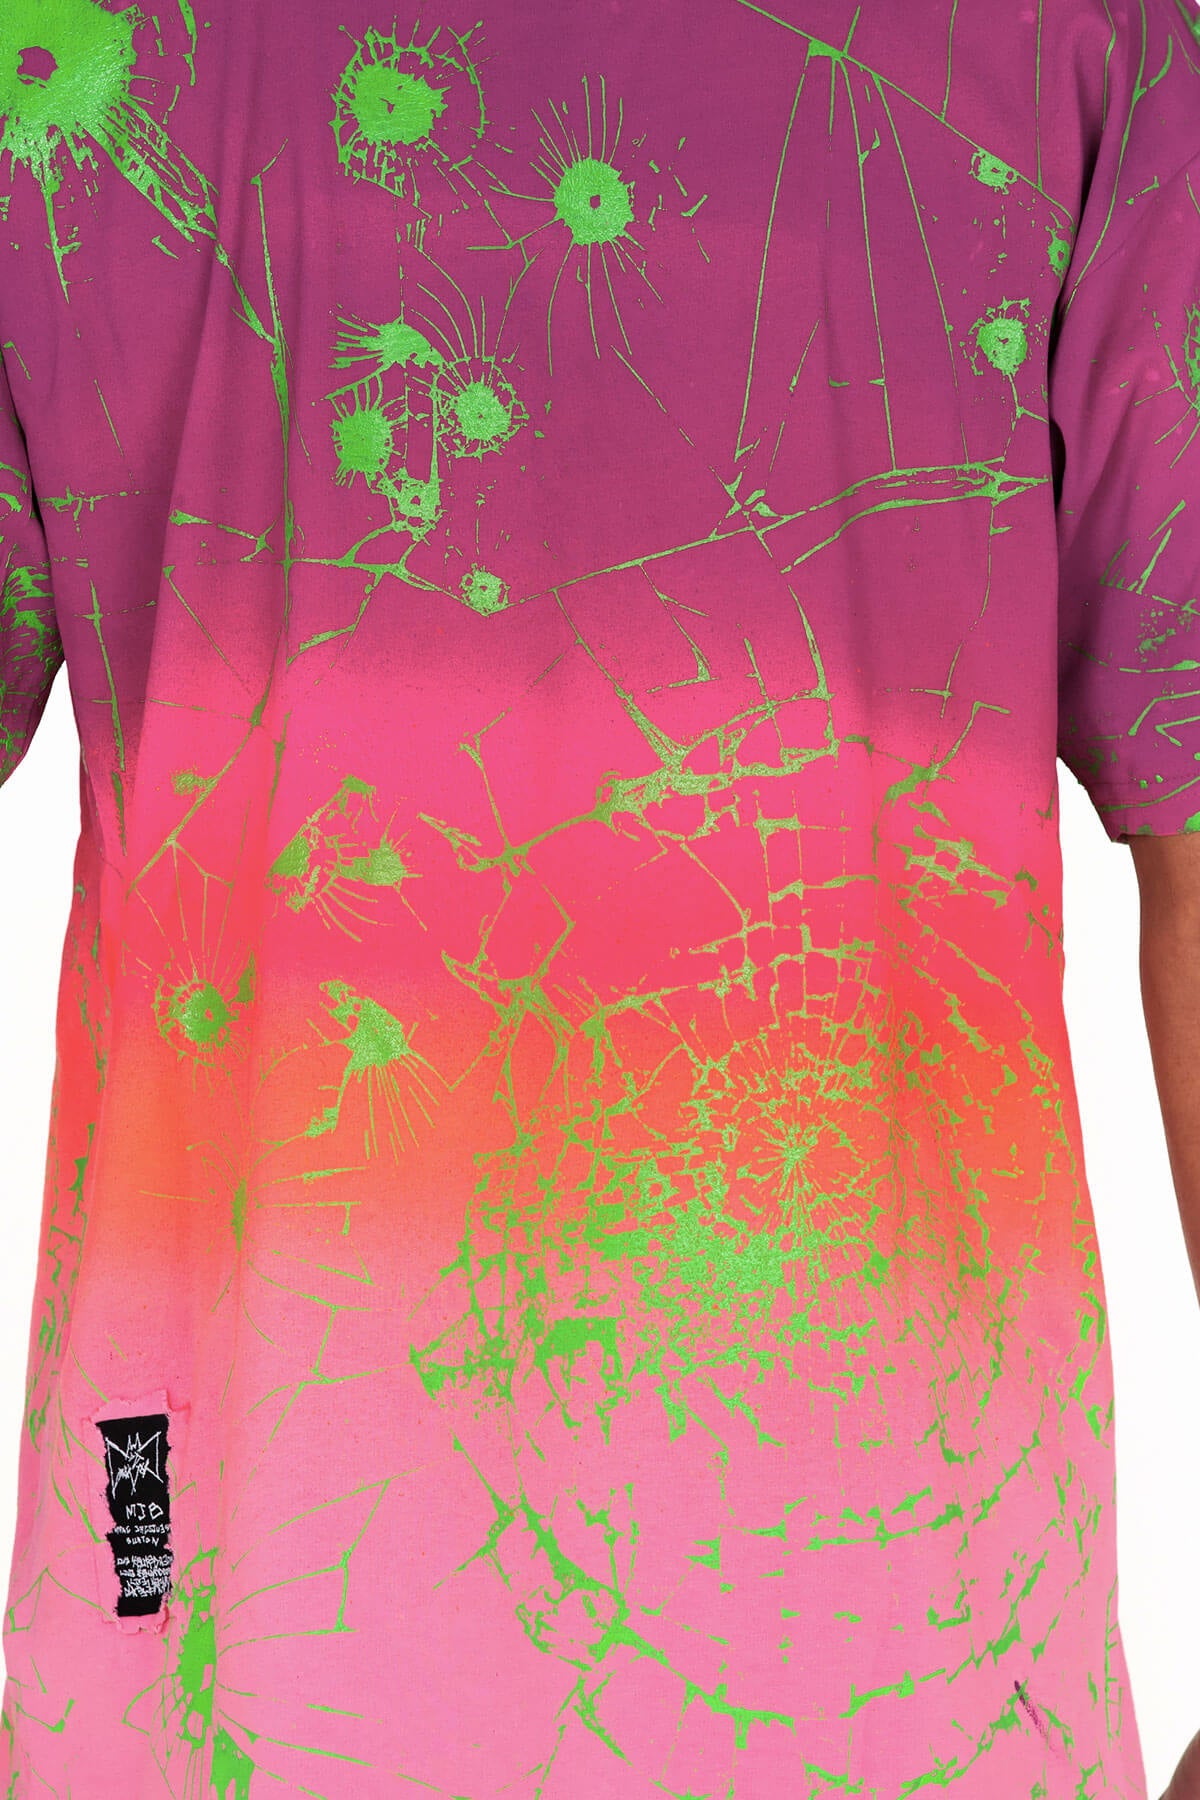 MJB X CIROC Festival T Shirt Multi Ombre Purple/Pink/ Ombre/ Lime Green - MJB